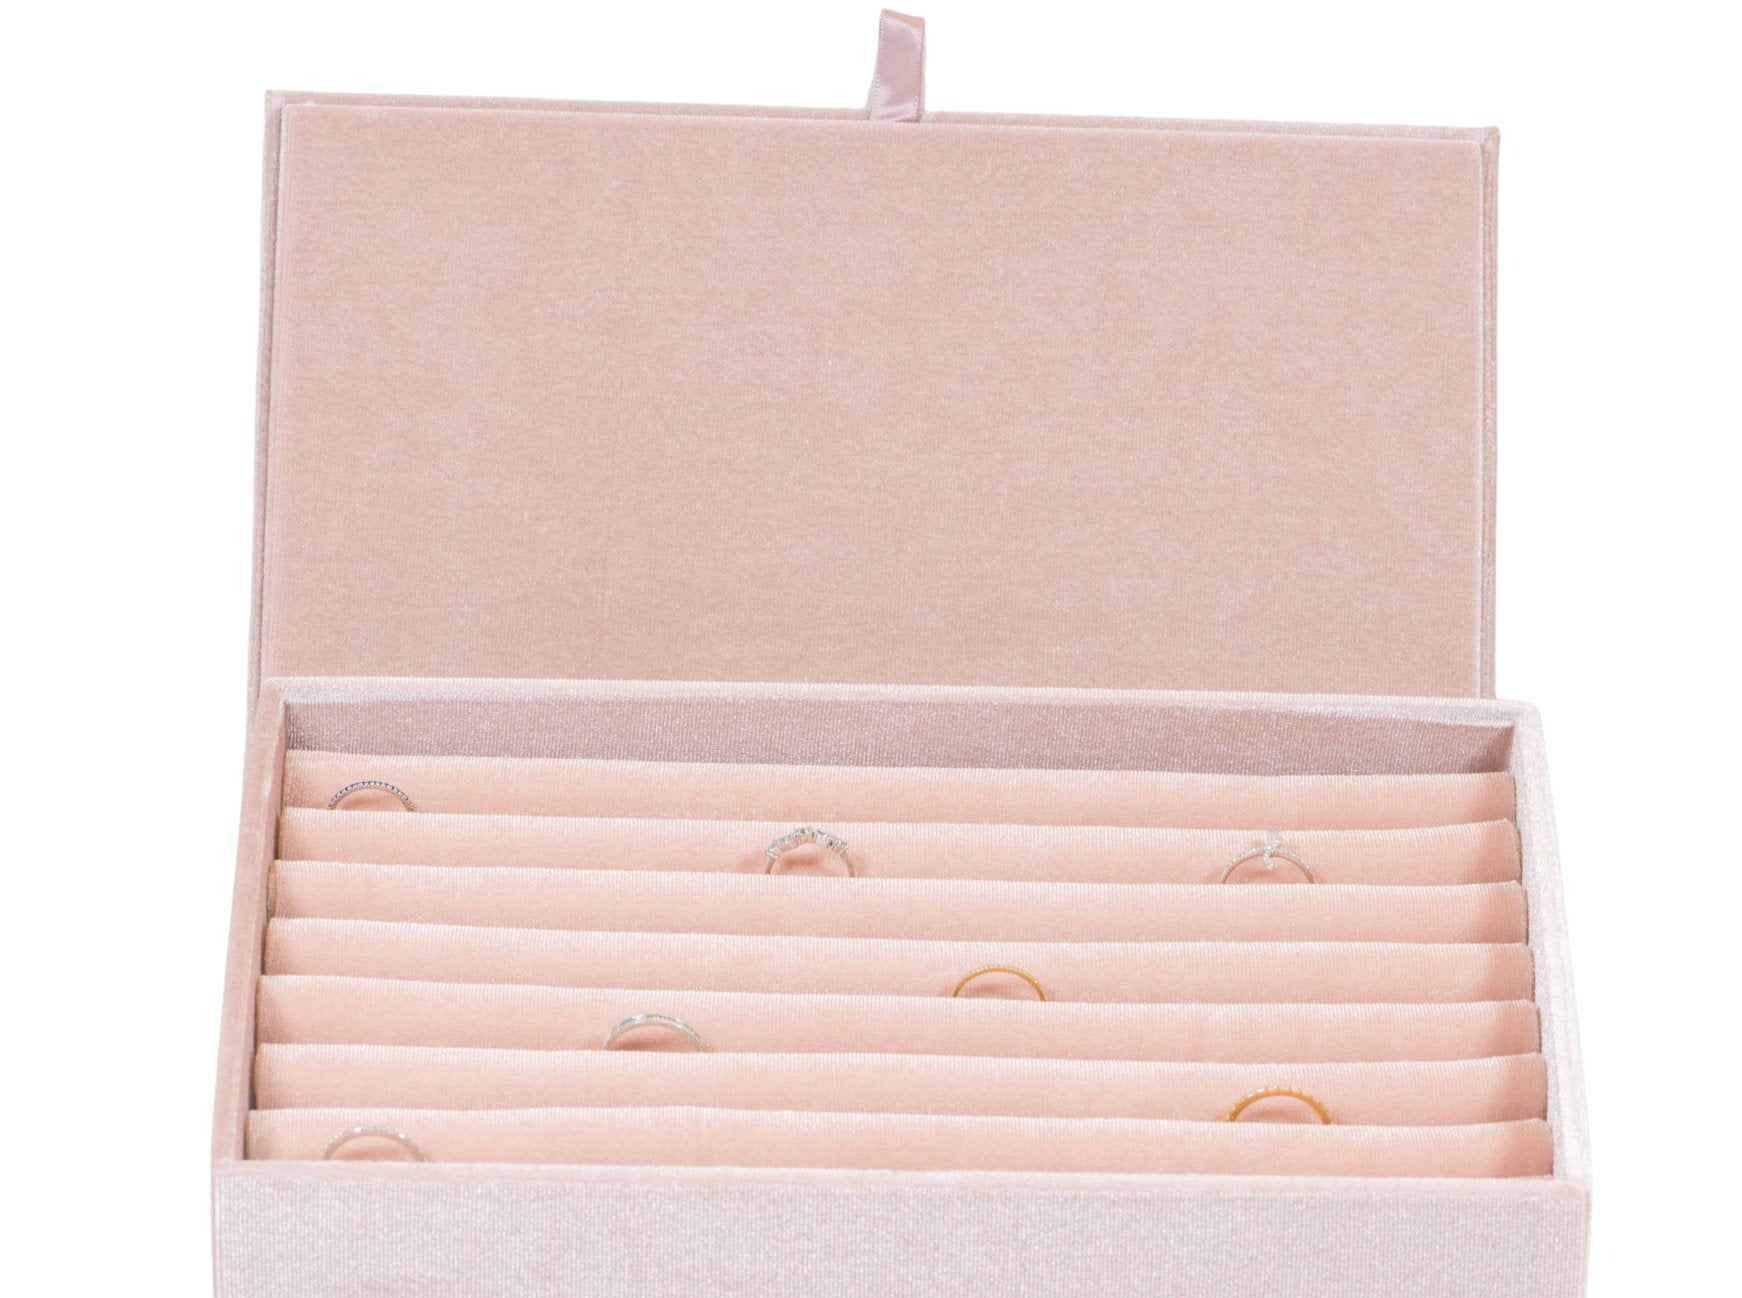 Aurora Designer - Large Multi-Ring Luxurious Velvet Jewelry Ring Box Tray  Display Case Birthday Gift for Her Multiple Row Rings Soft Light Dusty Pink  RB005 - Jo Dane